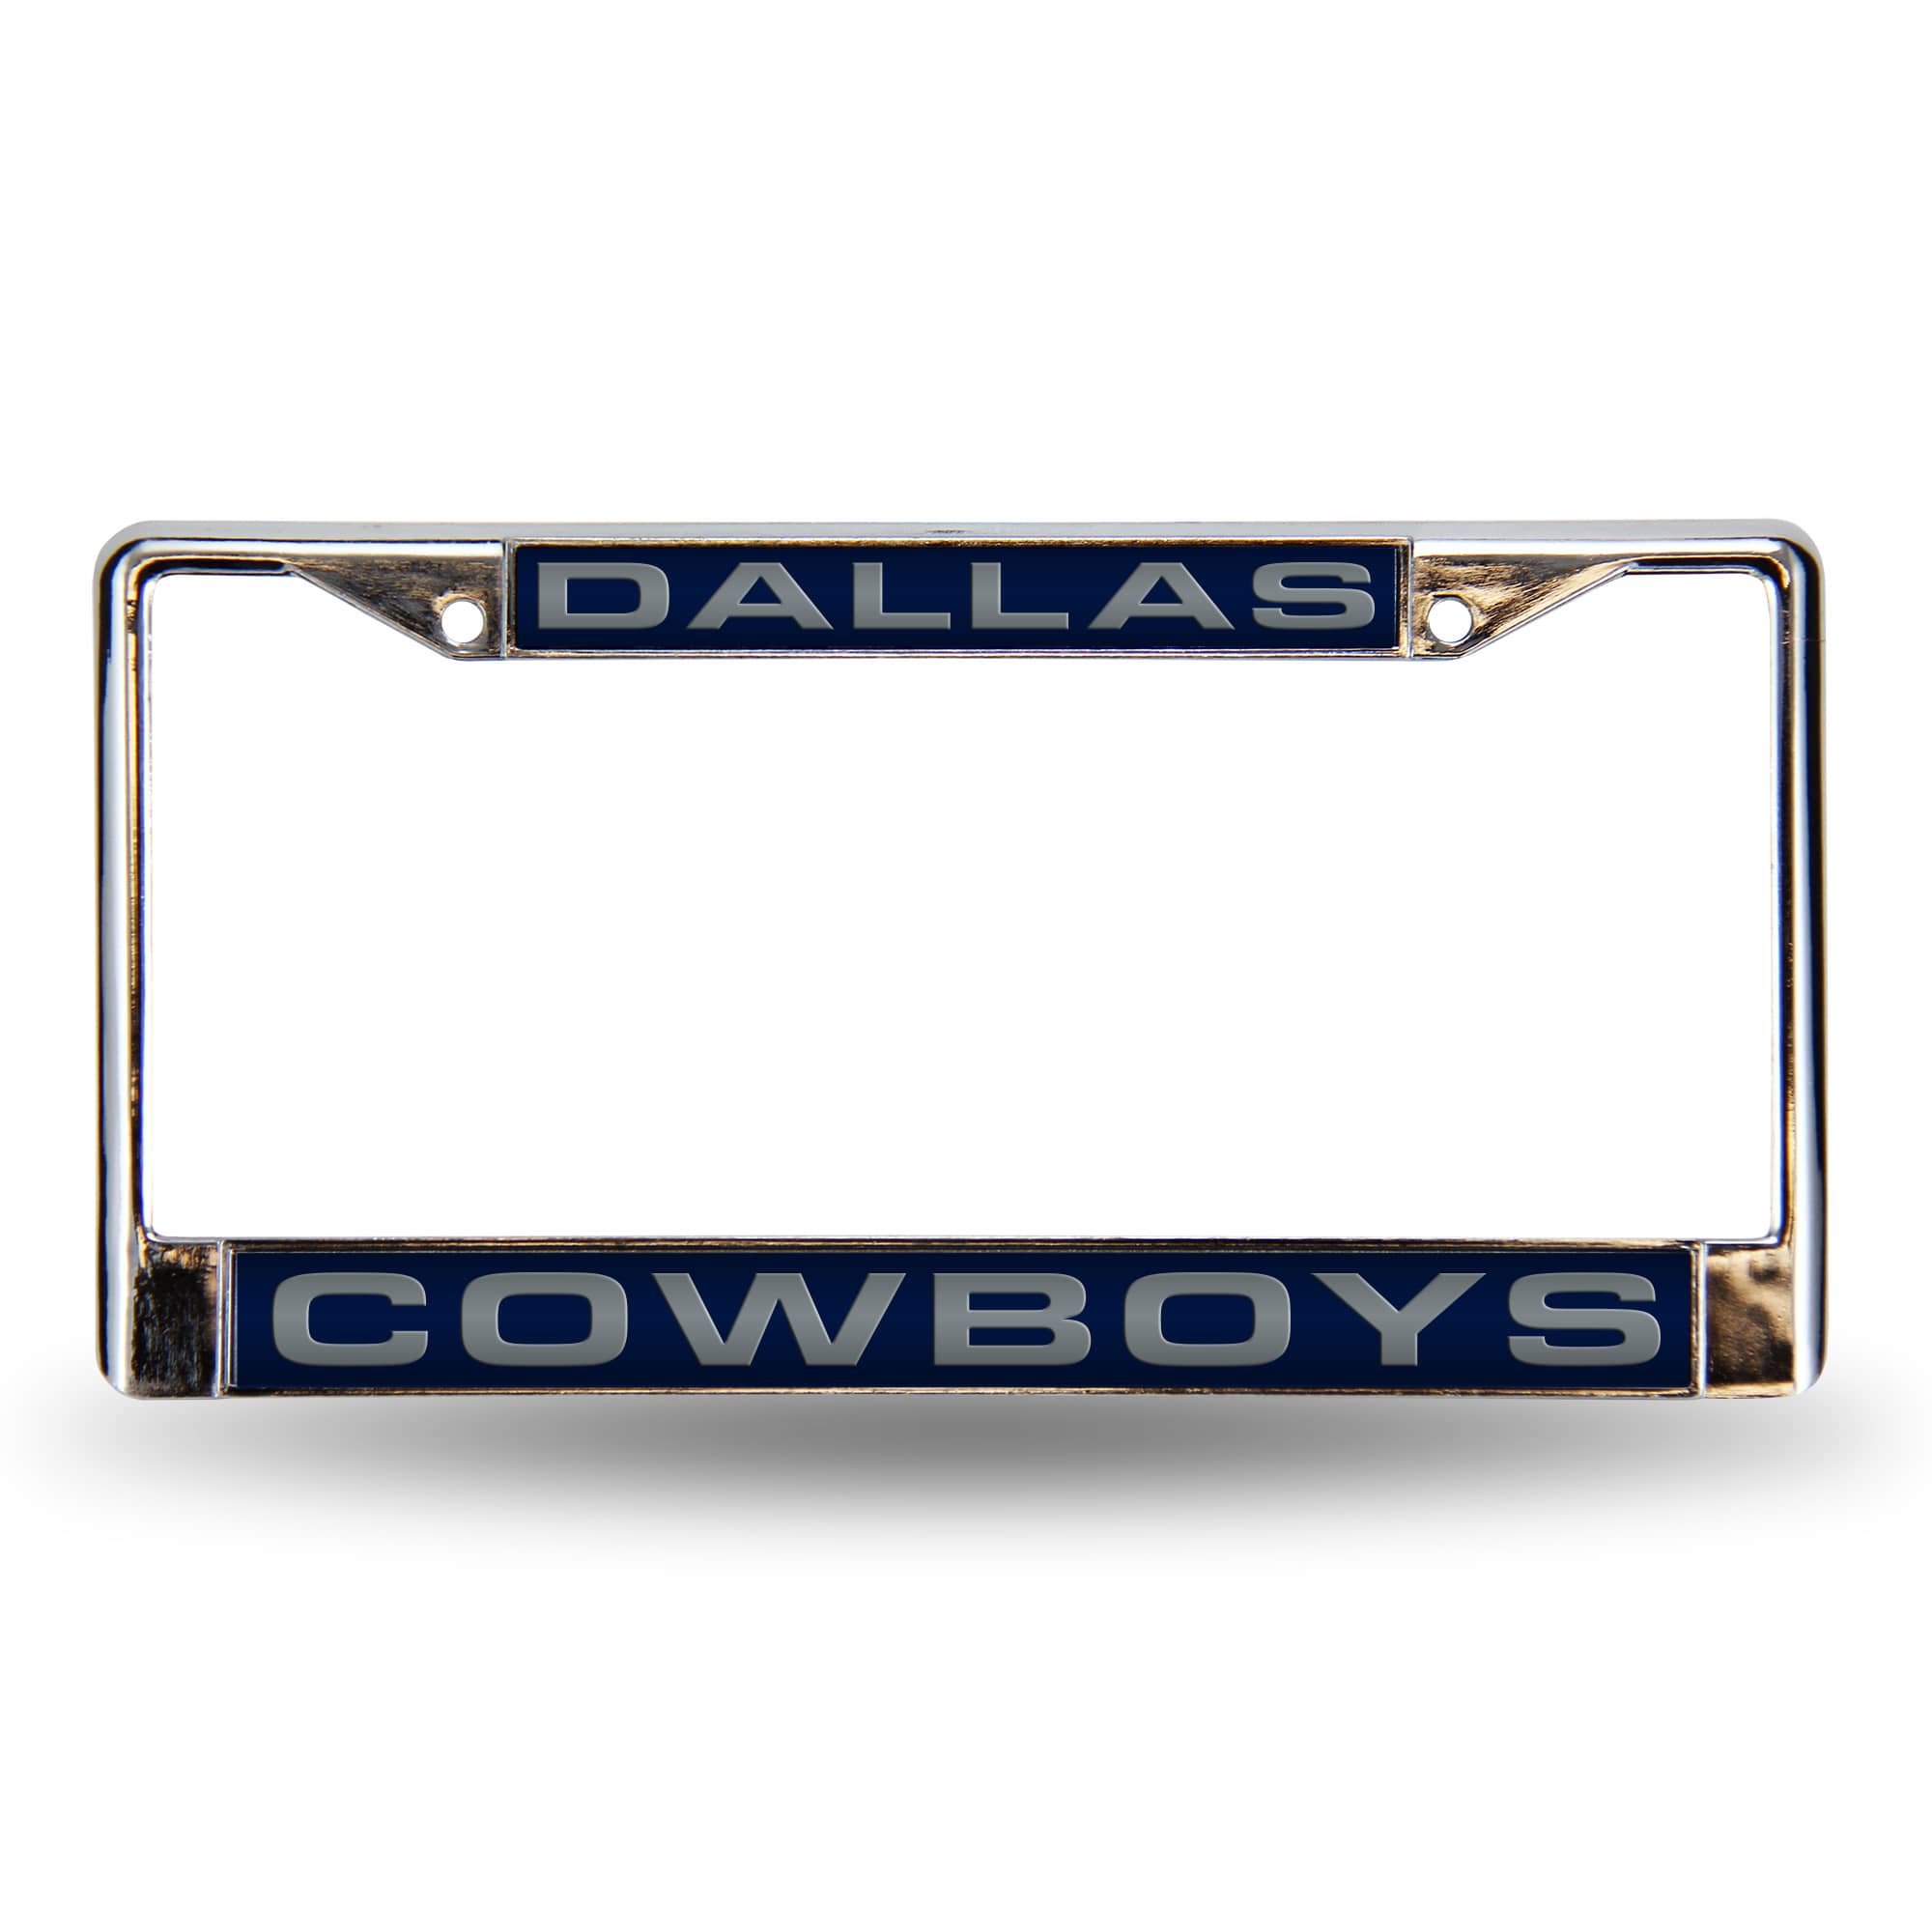 Rico 6" x 12" Blue and Silver Colored NFL Dallas Cowboys License Plate Cover